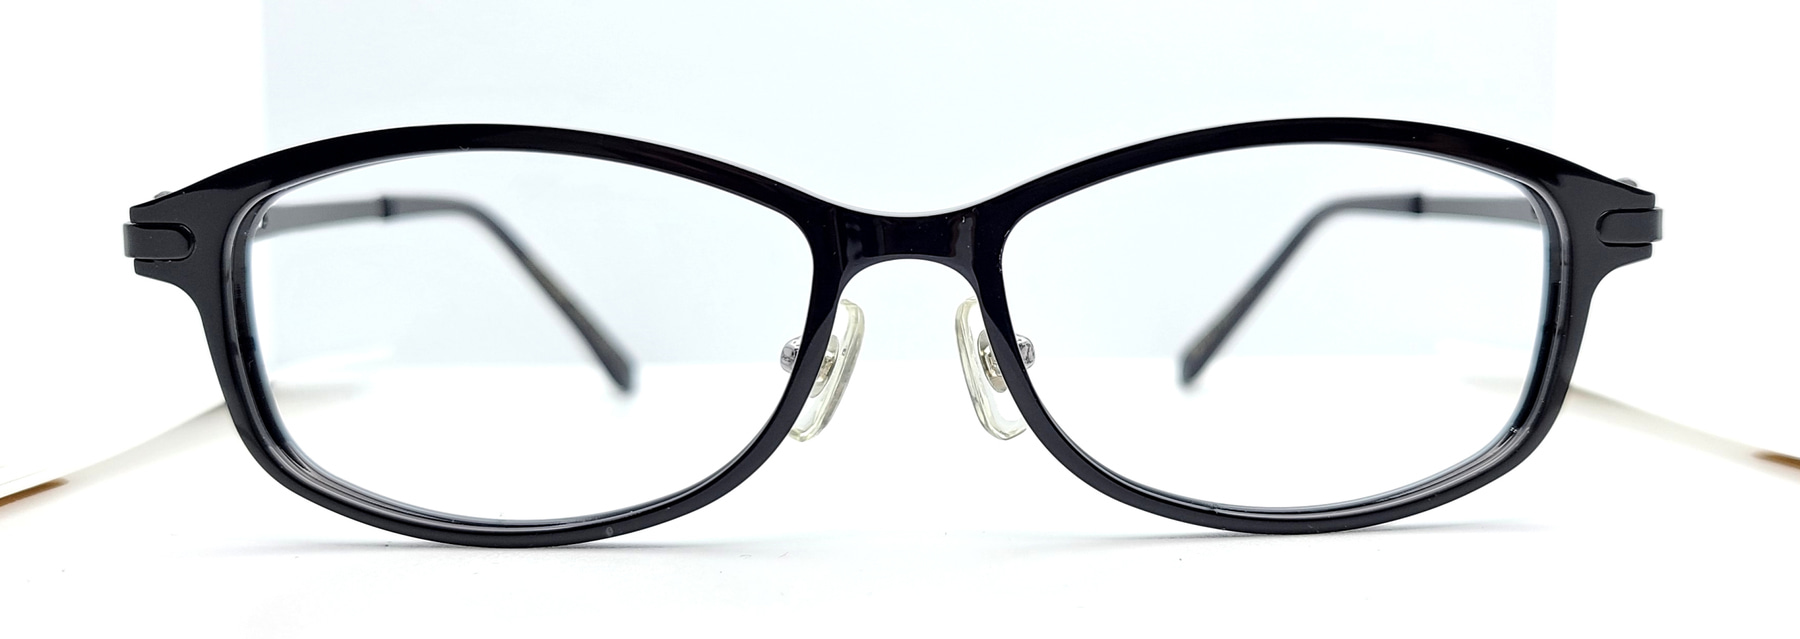 MINIHOUSE M-1361, Korean glasses, sunglasses, eyeglasses, glasses